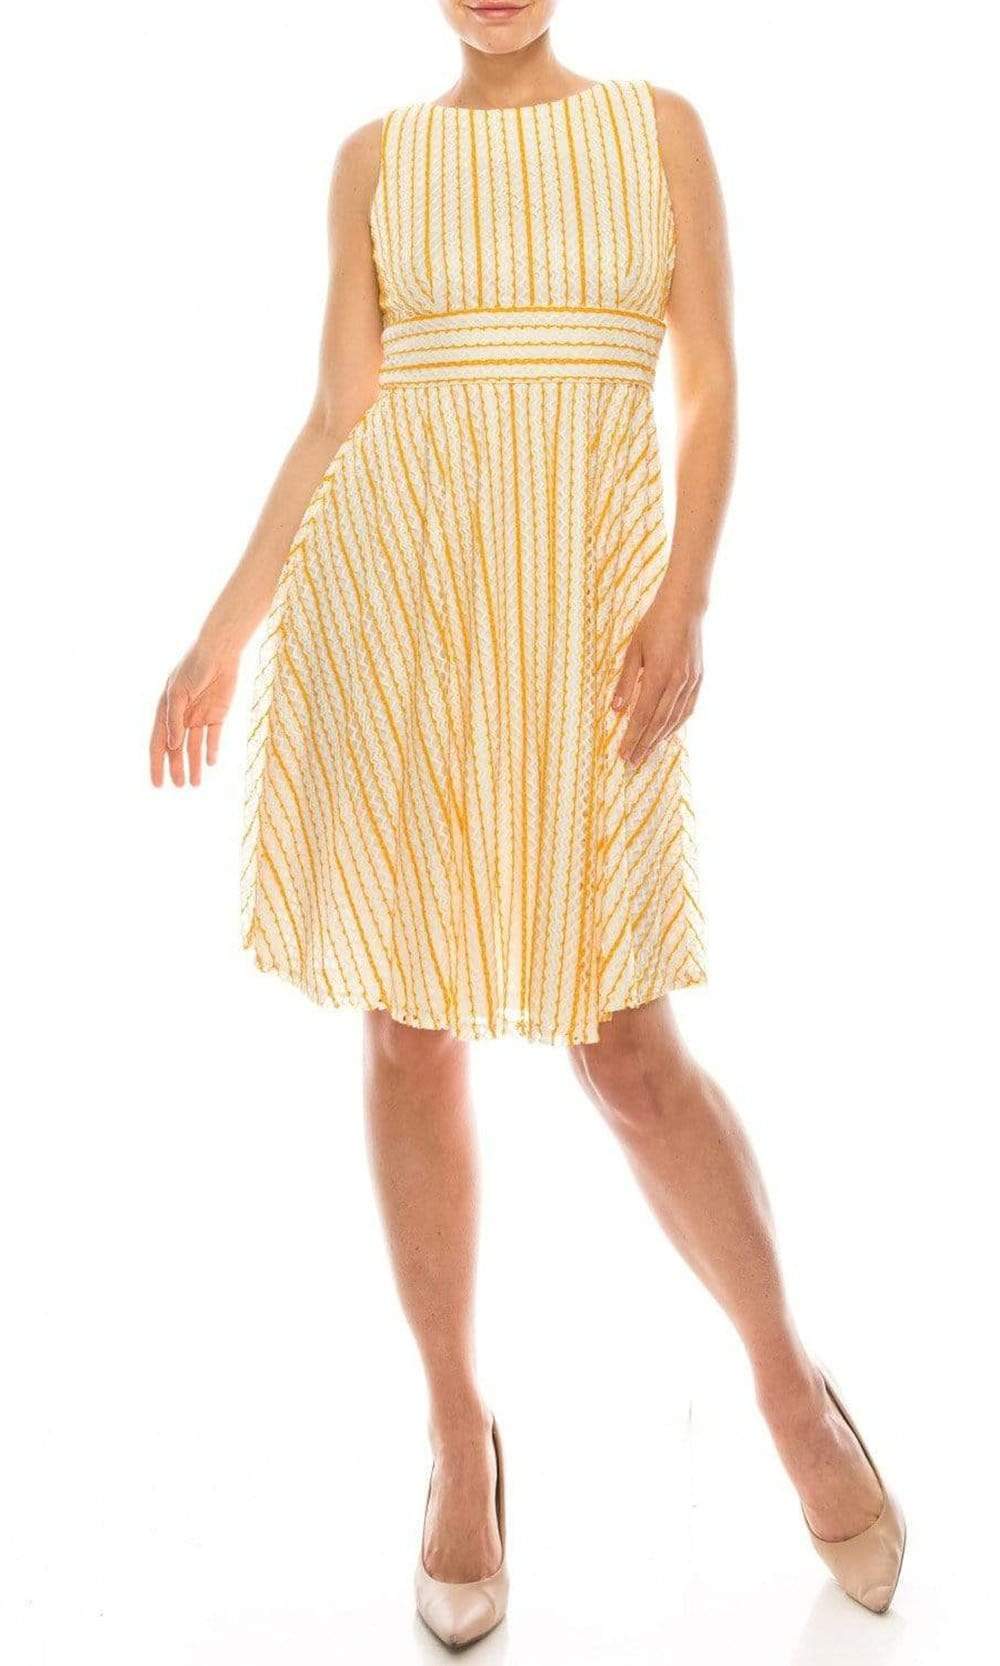 Gabby Skye - 18852M Sleeveless Crochet Stripe A-Line Dress
